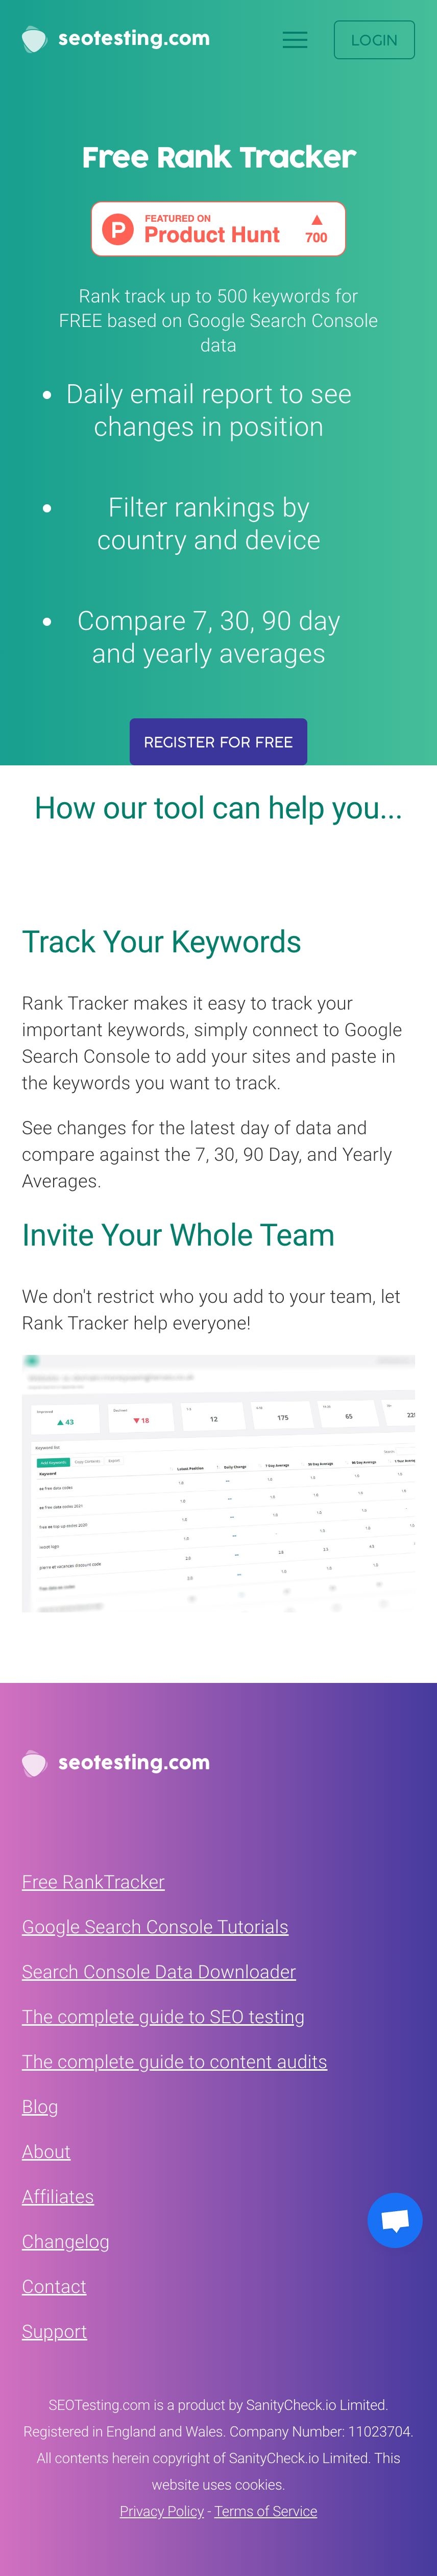 Free Google Rank Tracker landing page design